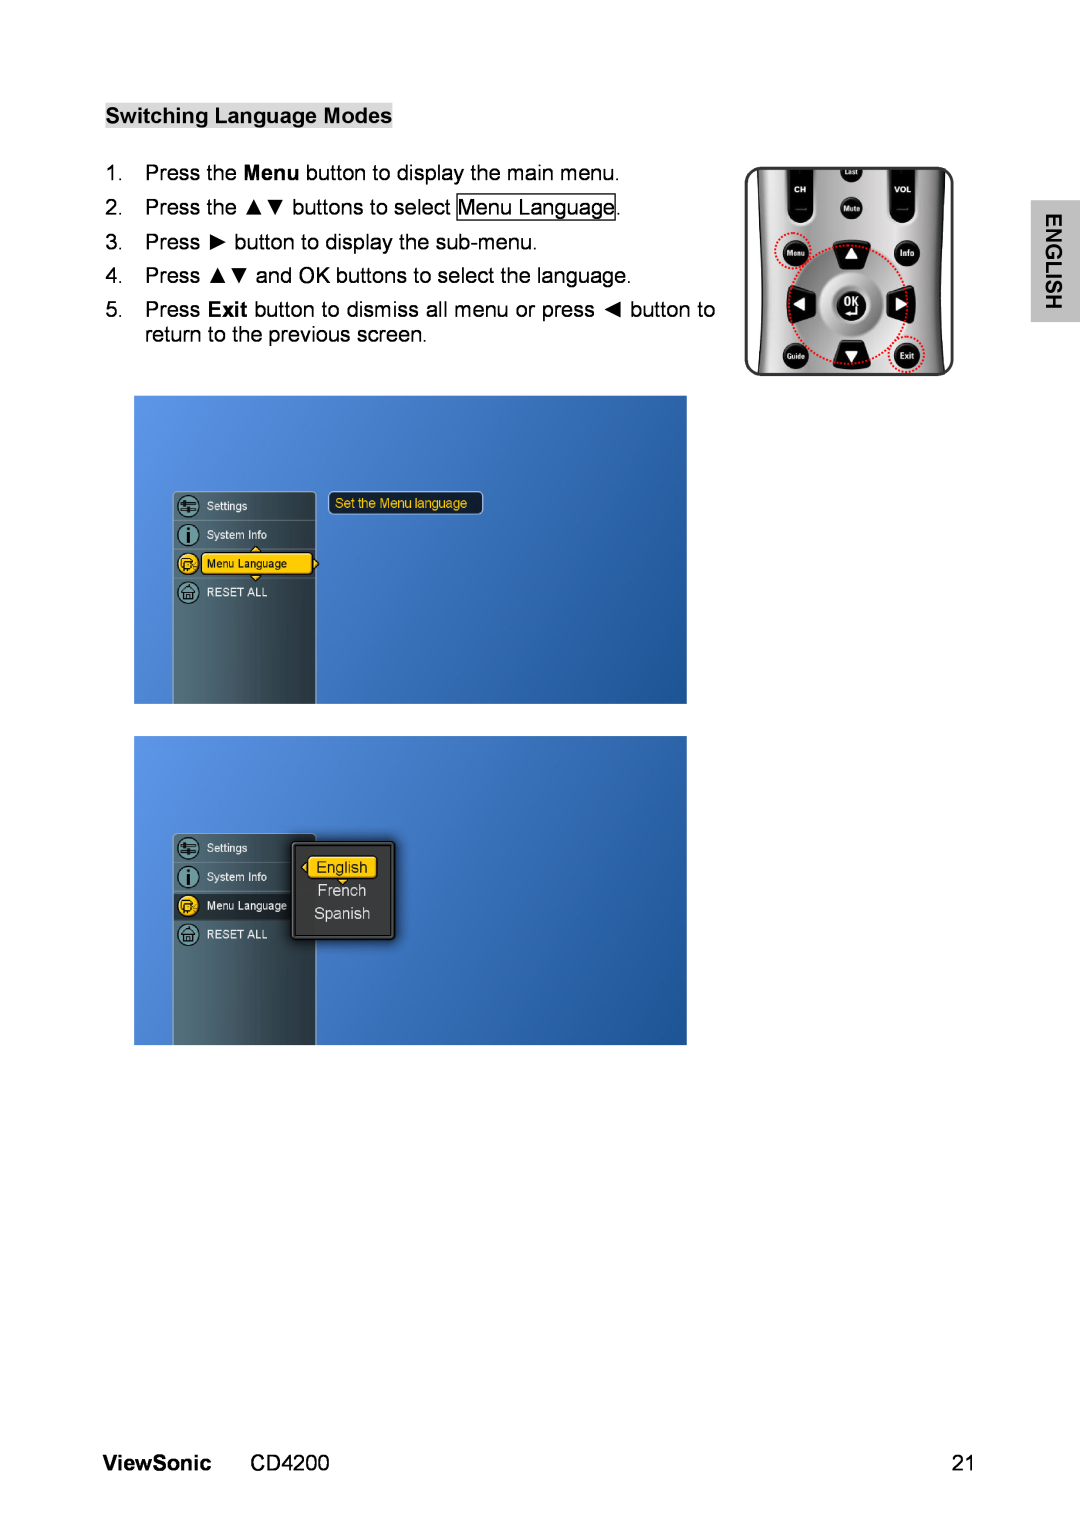 ViewSonic manual Switching Language Modes, Press the Menu button to display the main menu, English, ViewSonic CD4200 